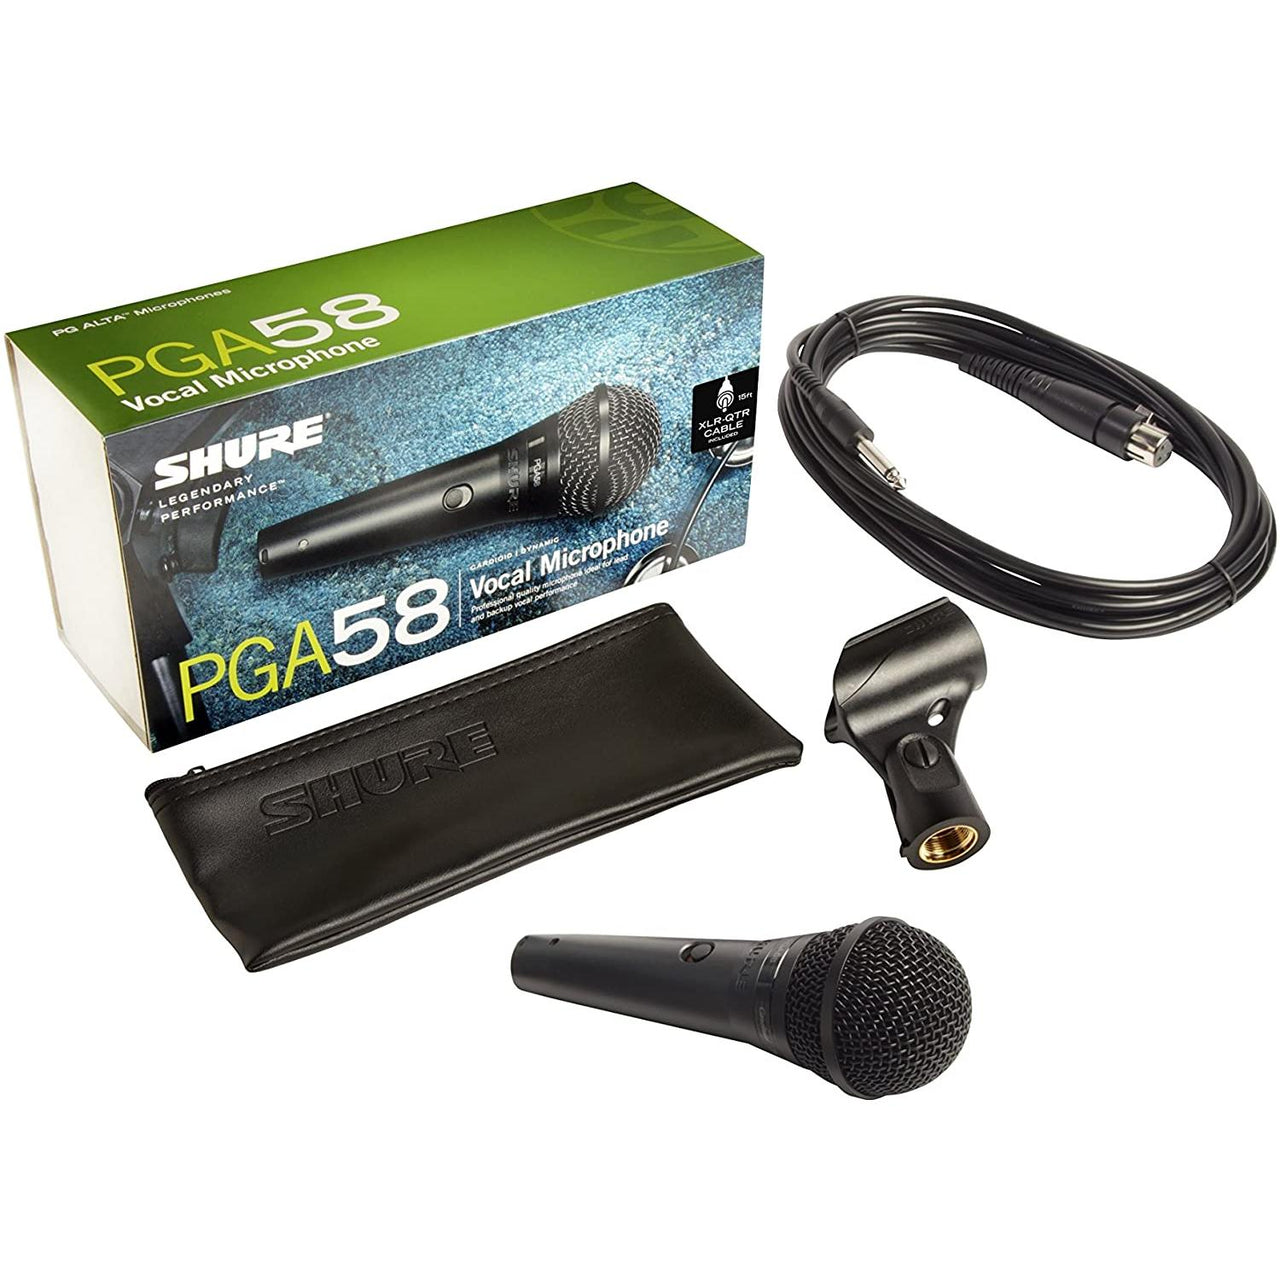 Microfono Shure Bobina Movil C/Cable, Pga58-Qtr